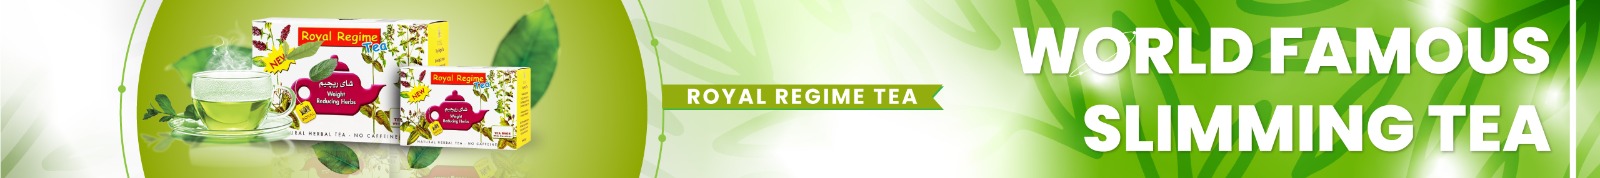 royal regime tea